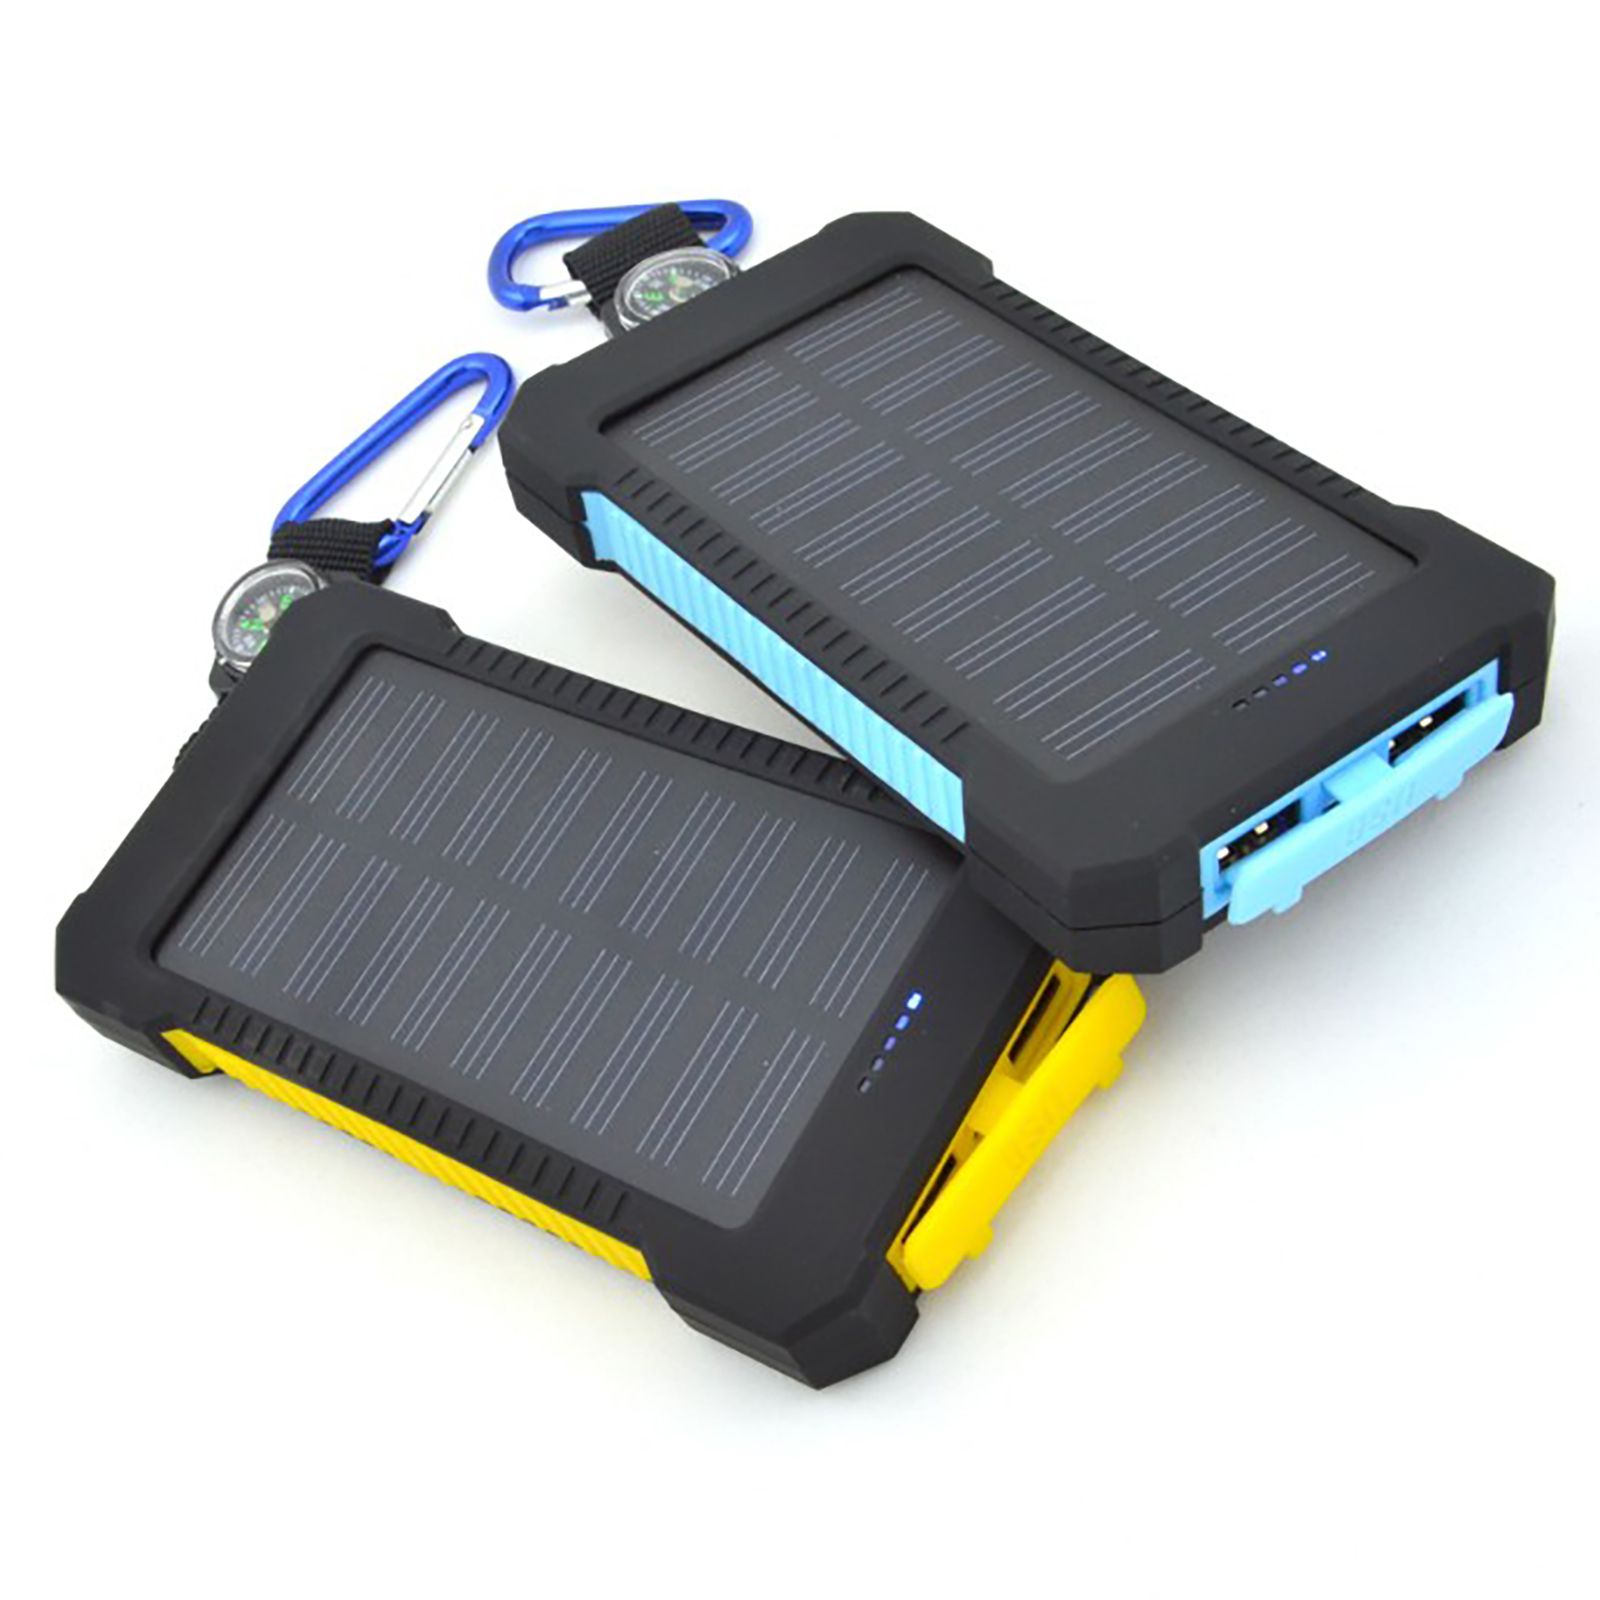 Portable 3000mAH Solar Power Bank